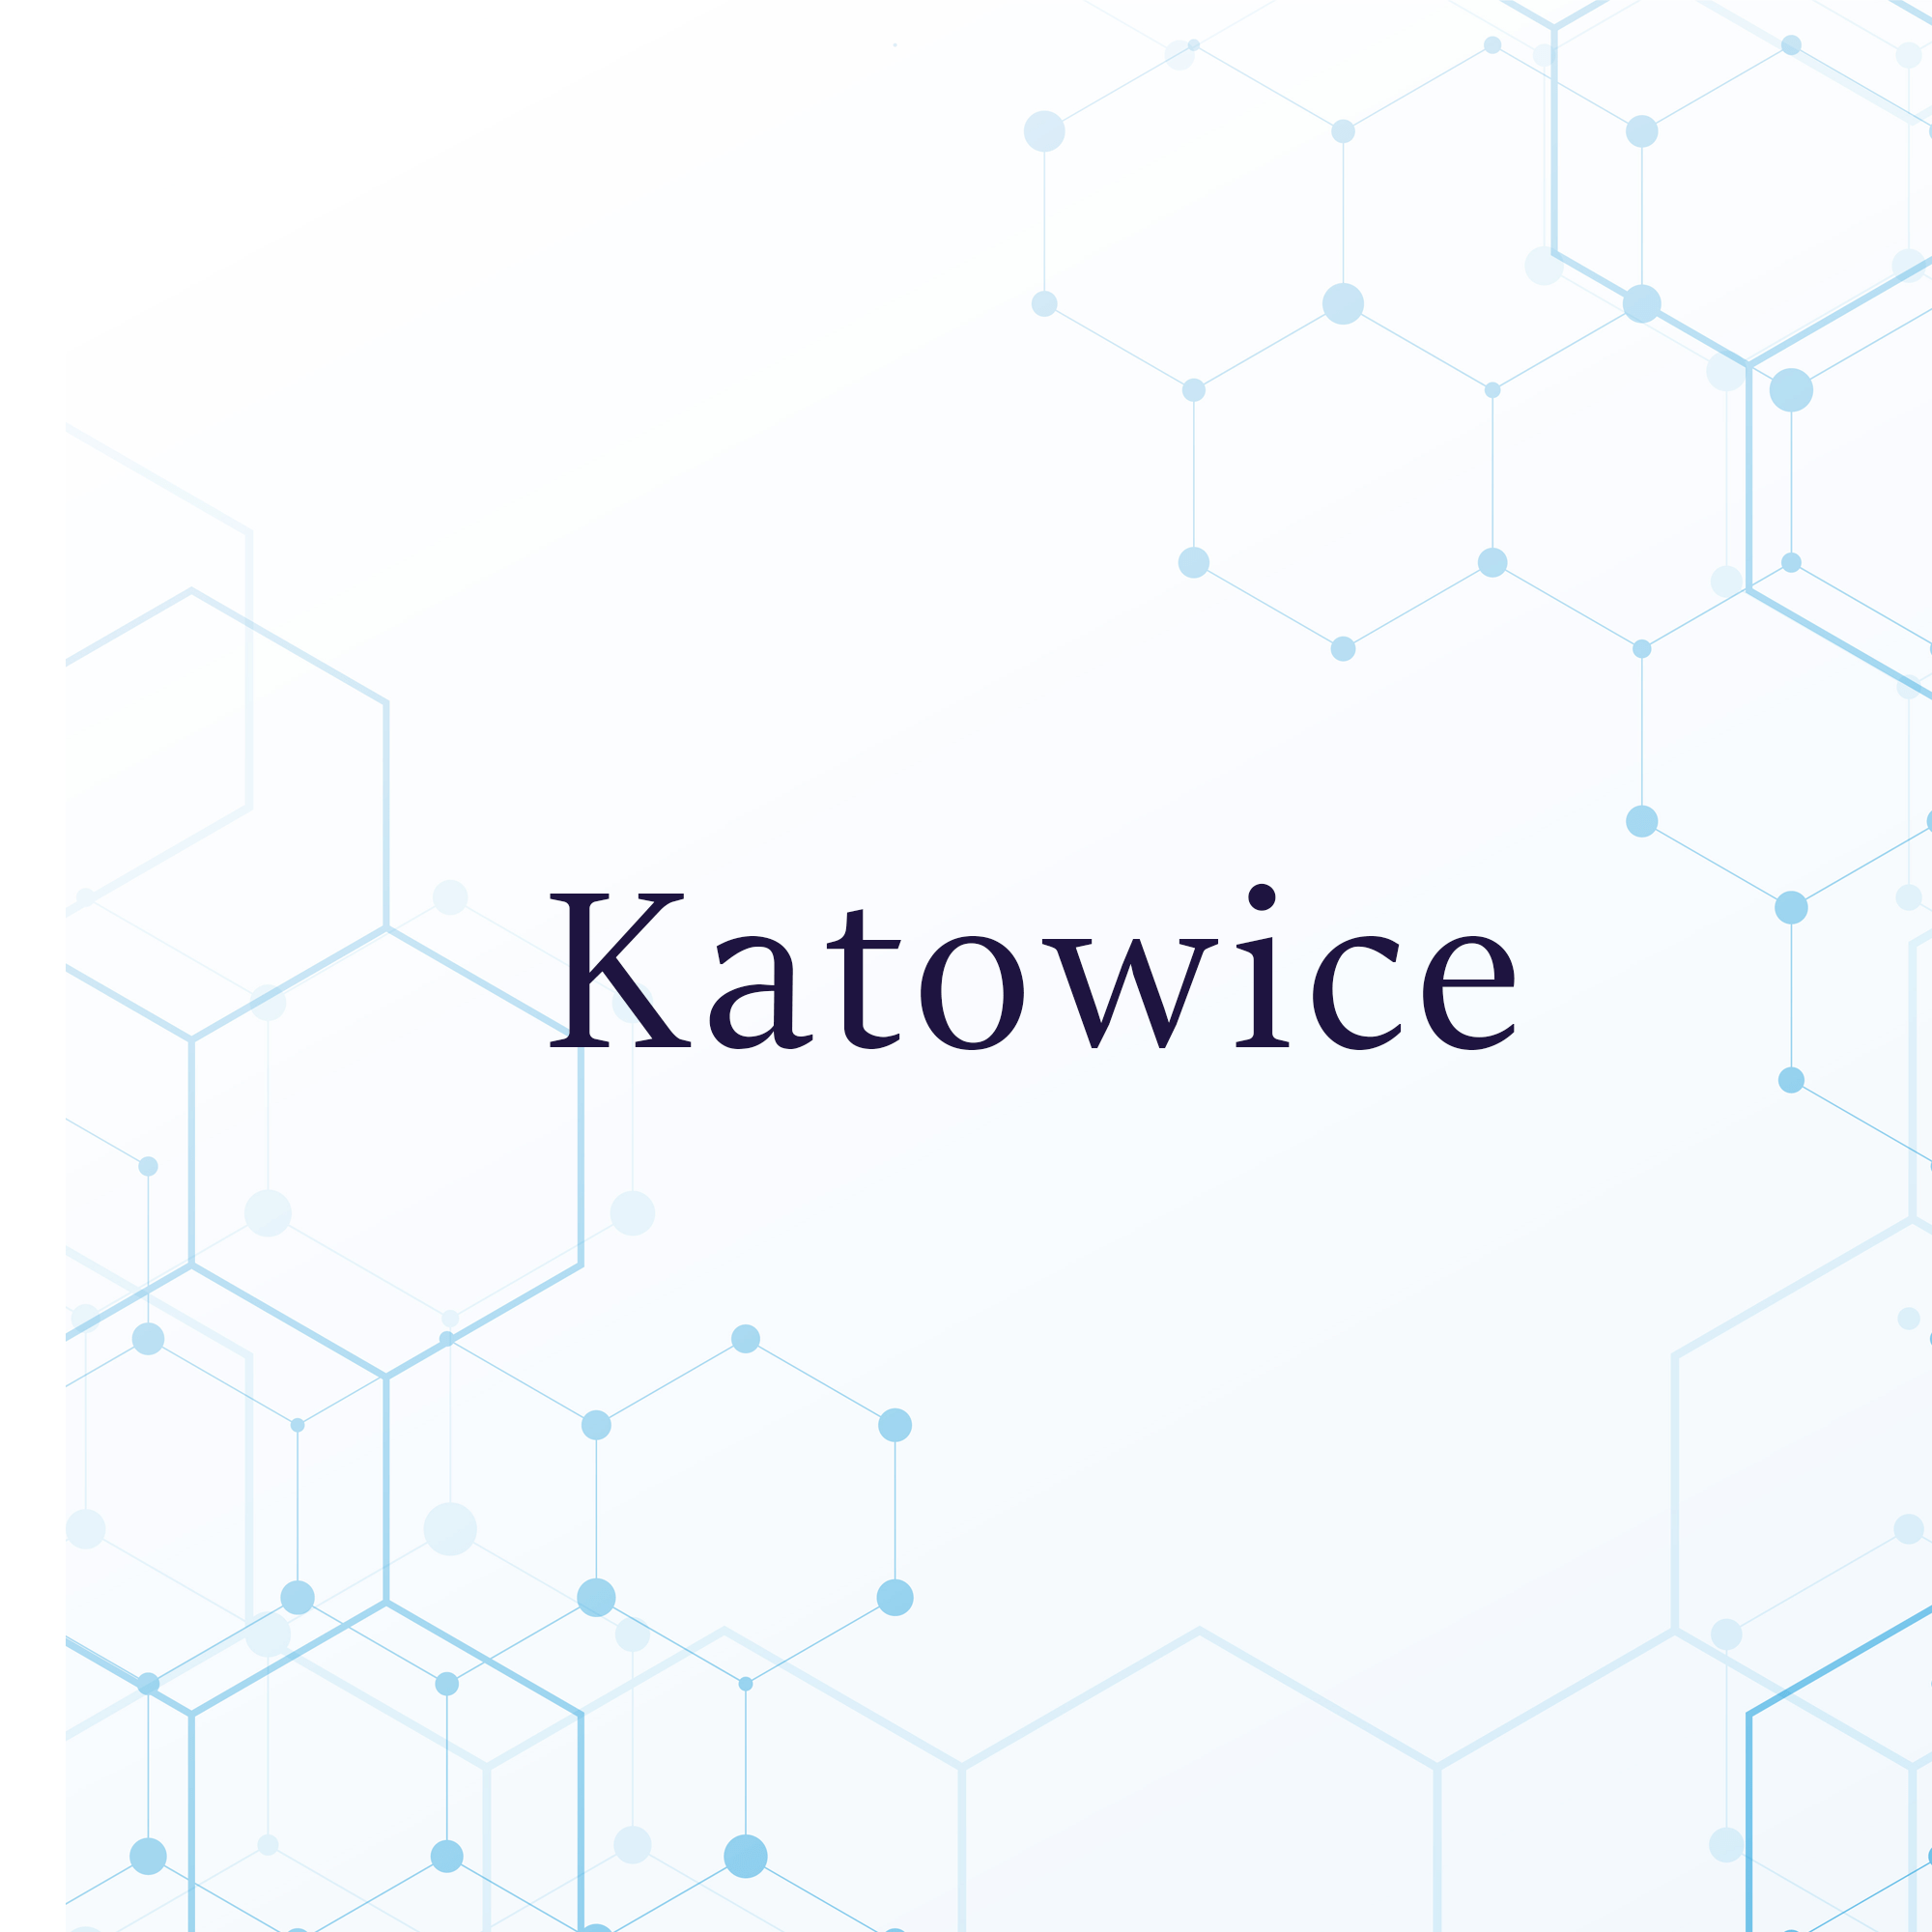 Test wodorowo-metanowy Katowice